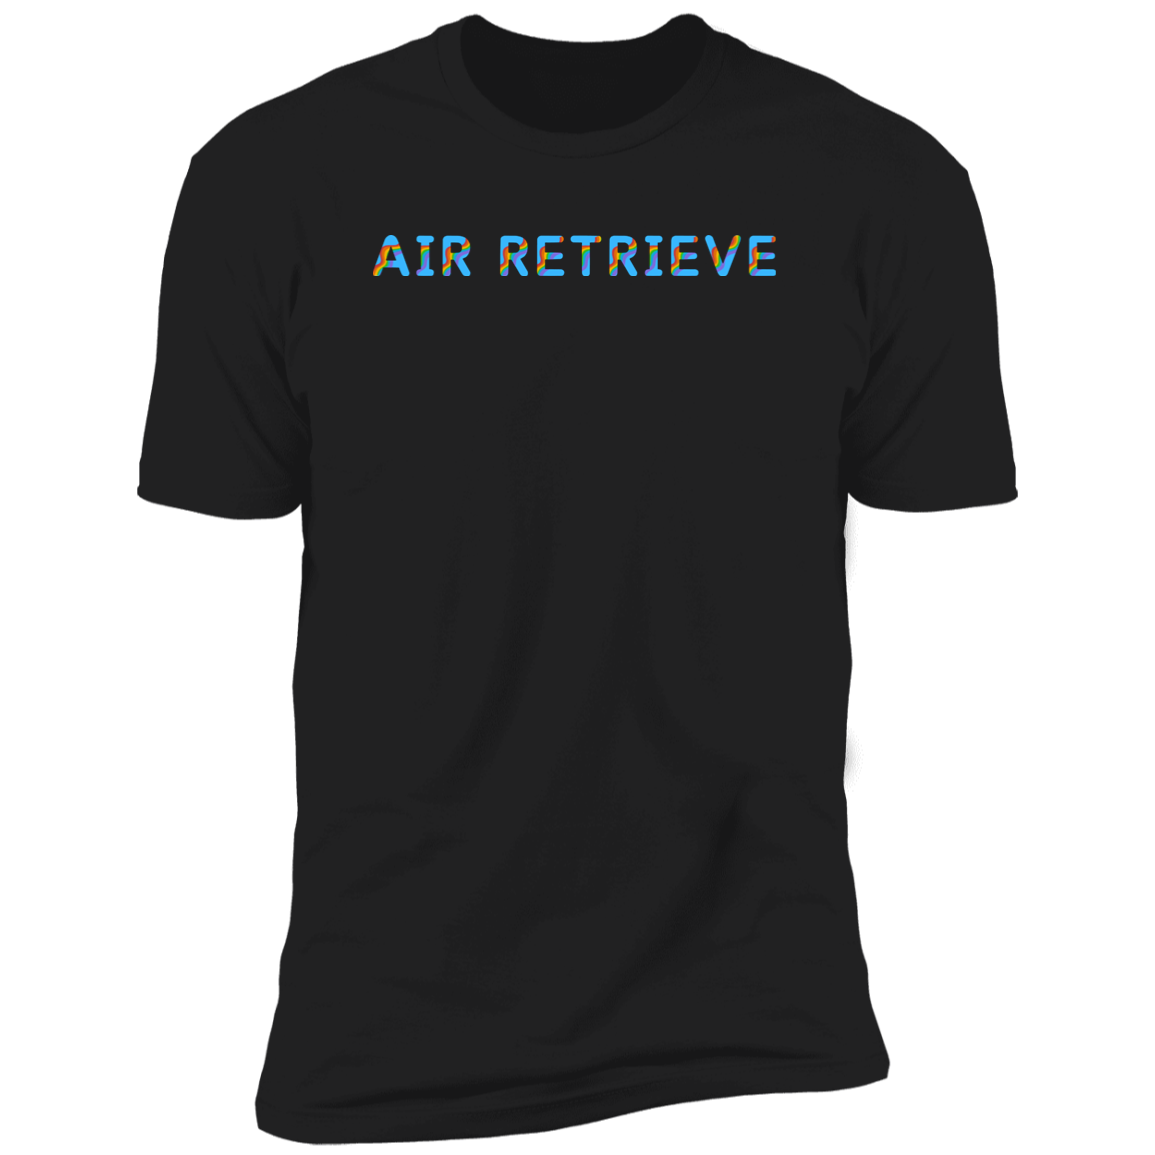 Air Retrieve Pride Dock diving t-shirt, dog pride air retrieve dock diving shirt for humans, in black